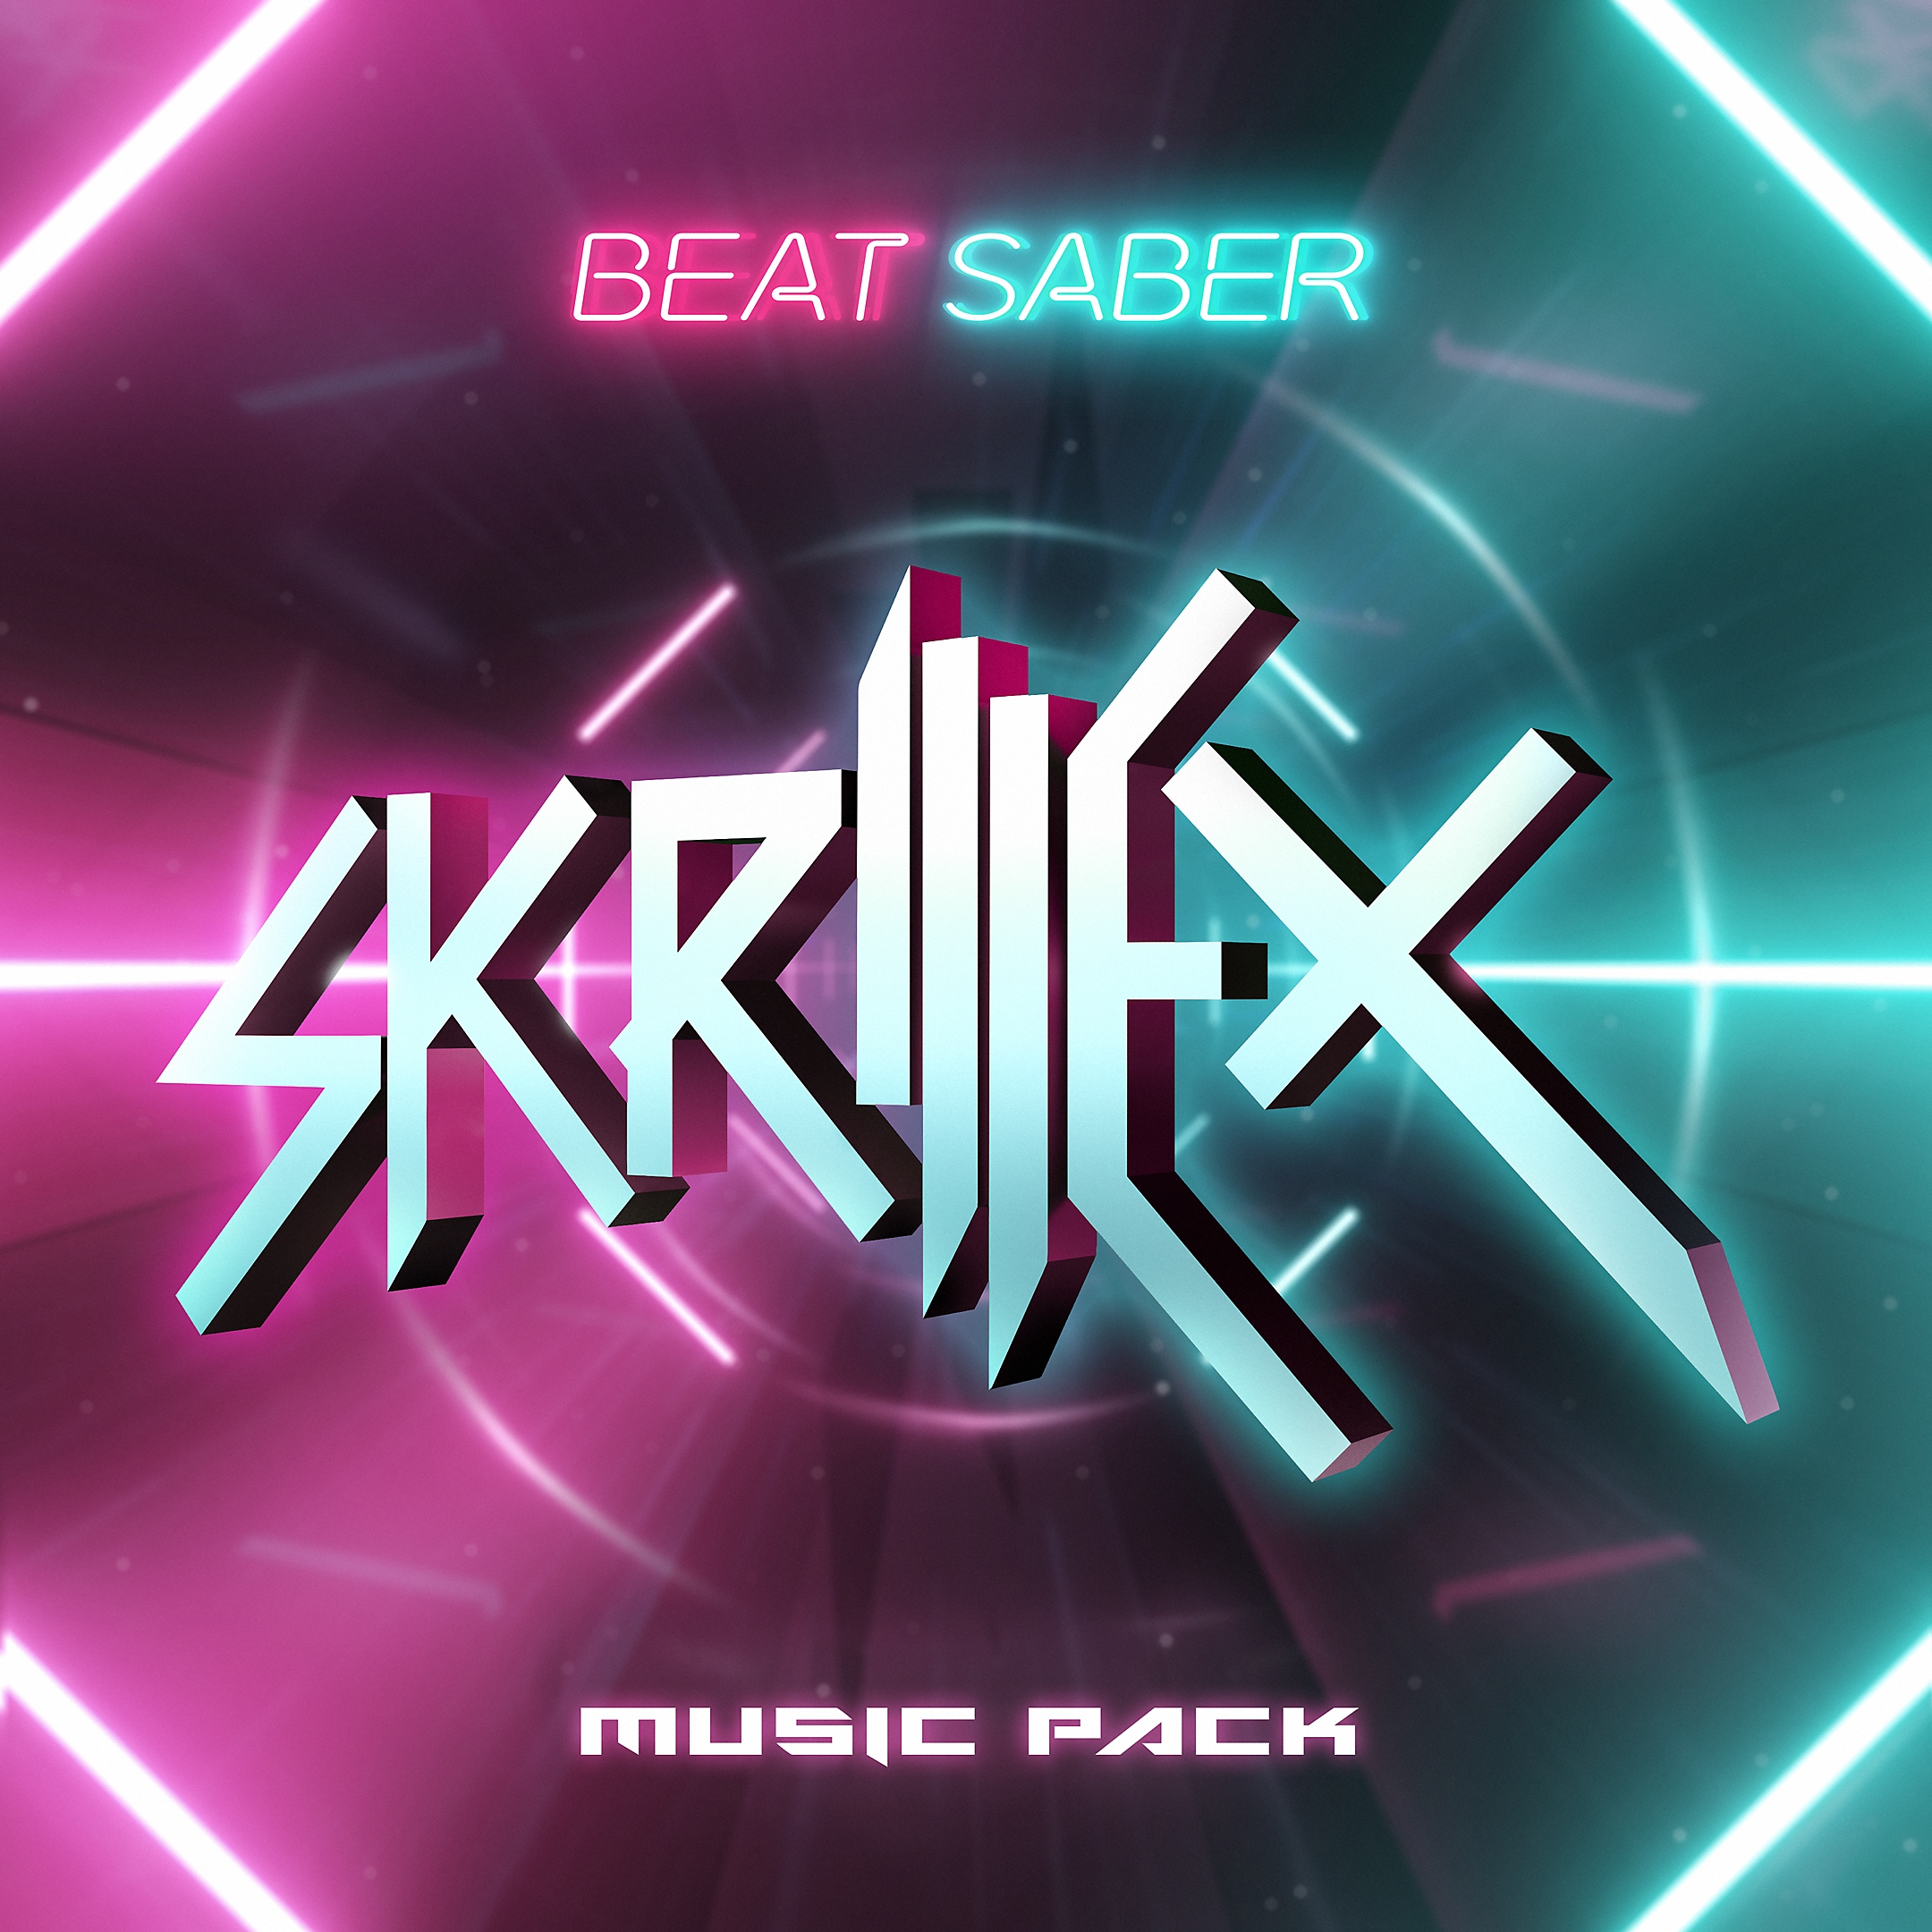 Pacote de música Skrillex de Beat Saber